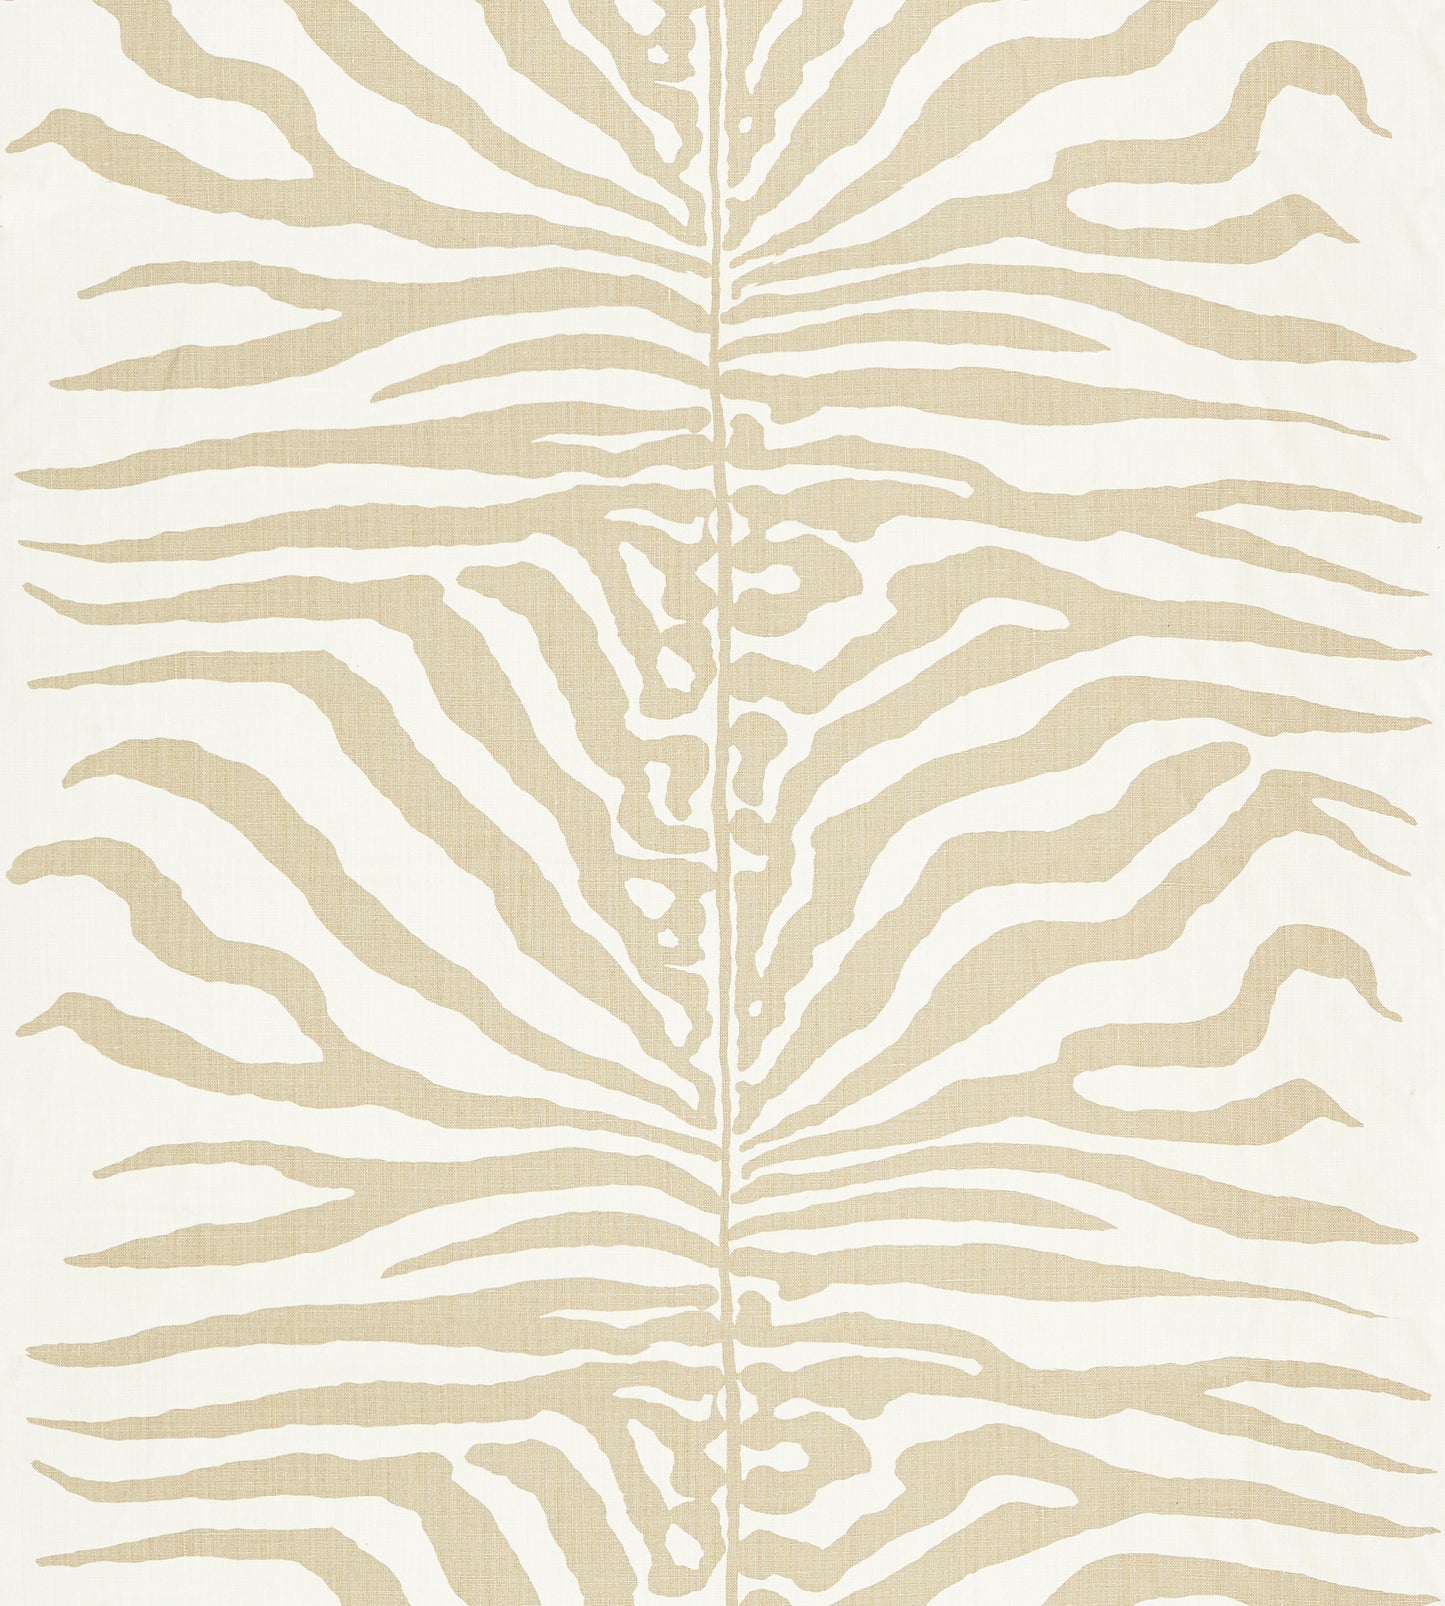 Purchase Scalamandre Fabric Pattern number SC 000216366M, Zebra Sahara 4